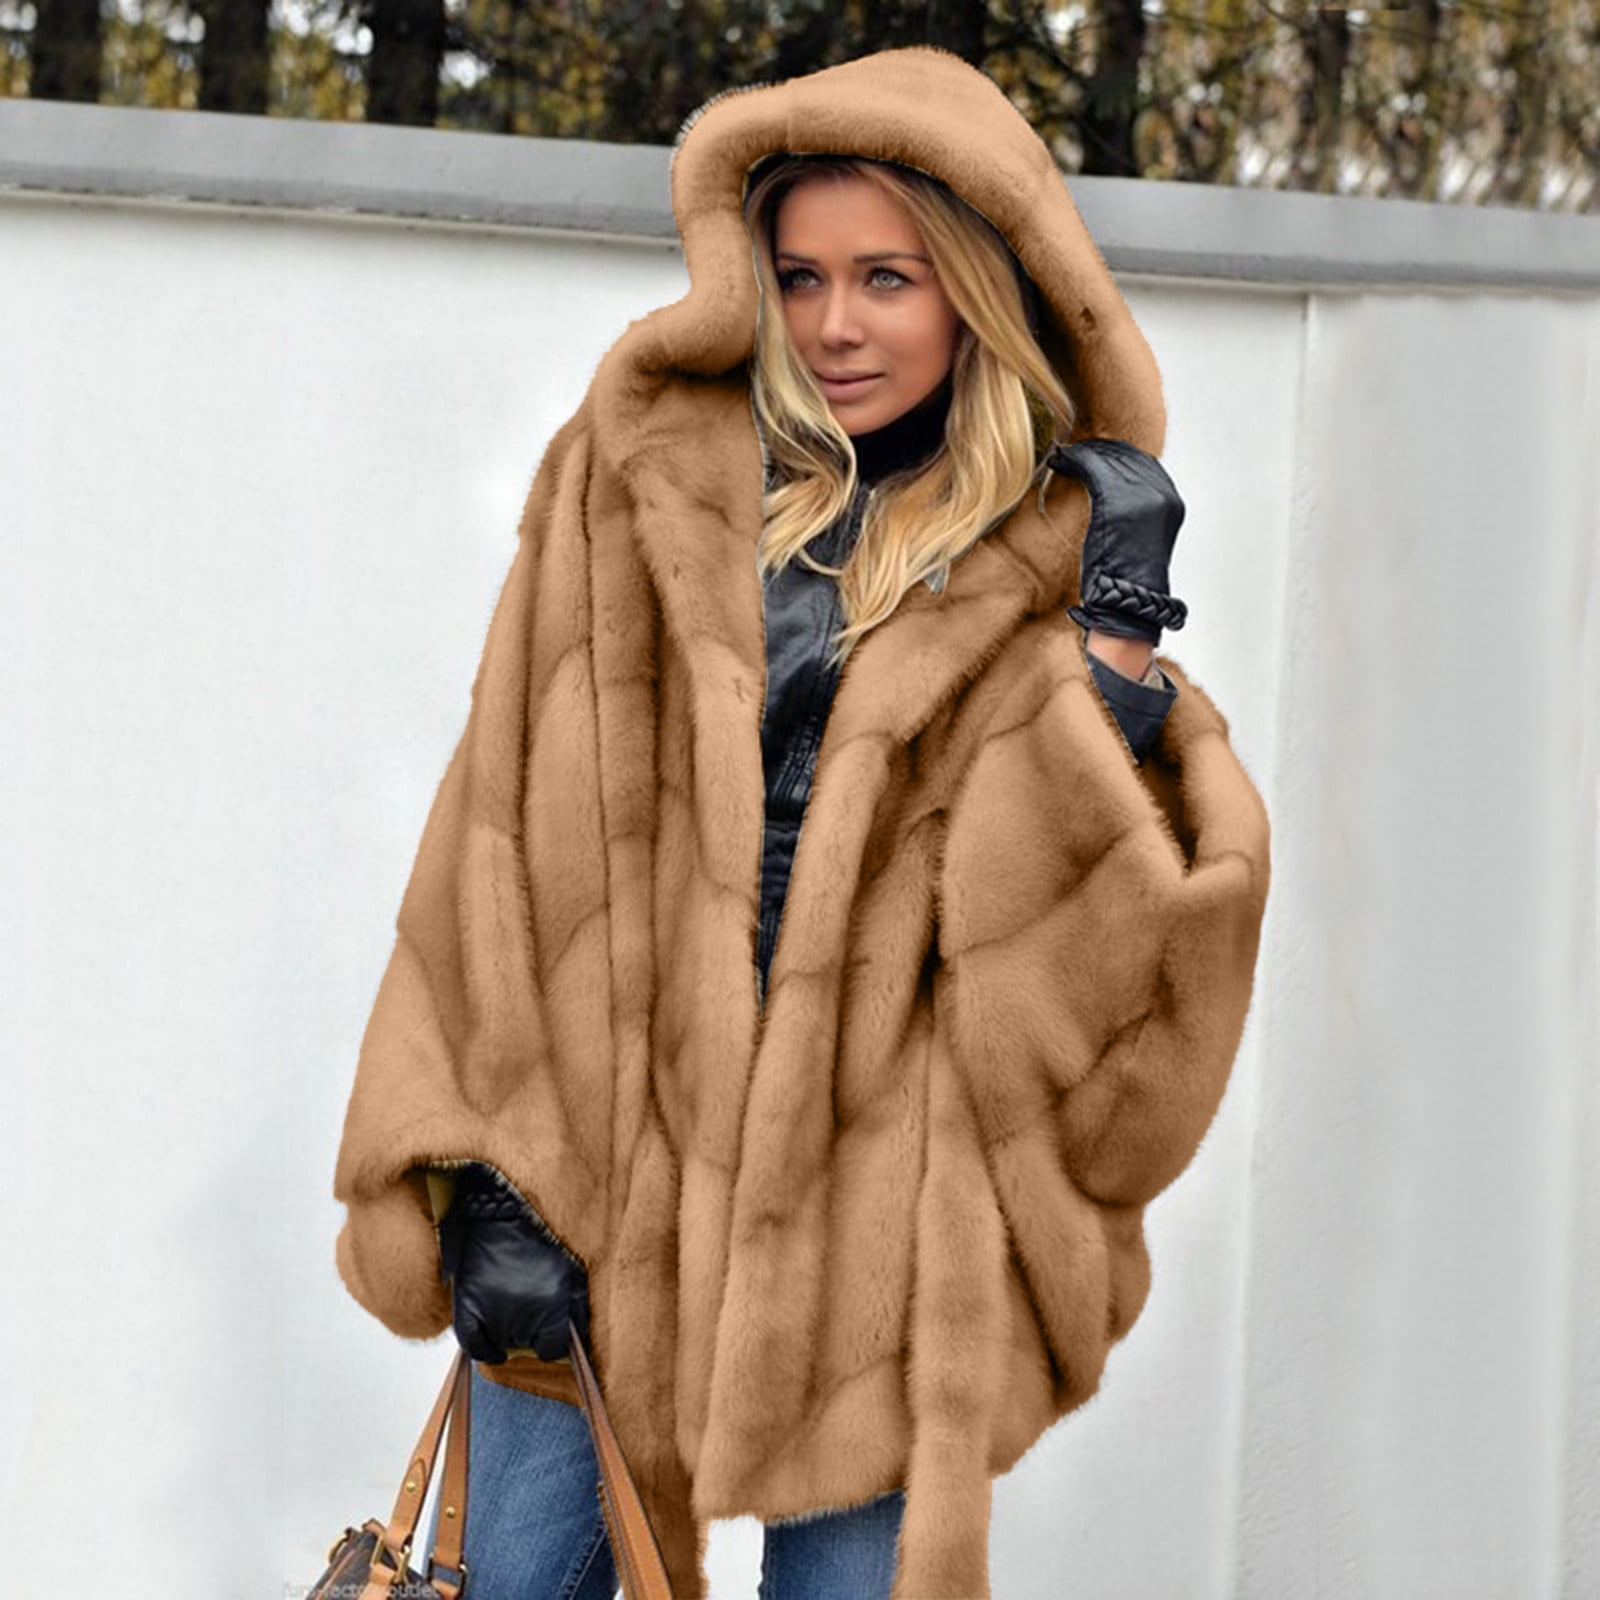 labakihah coats for women women's -fur' winter plus size elegant solid  color batwing sleeve fur' coat warm outerwear tops temperament coat hooded 